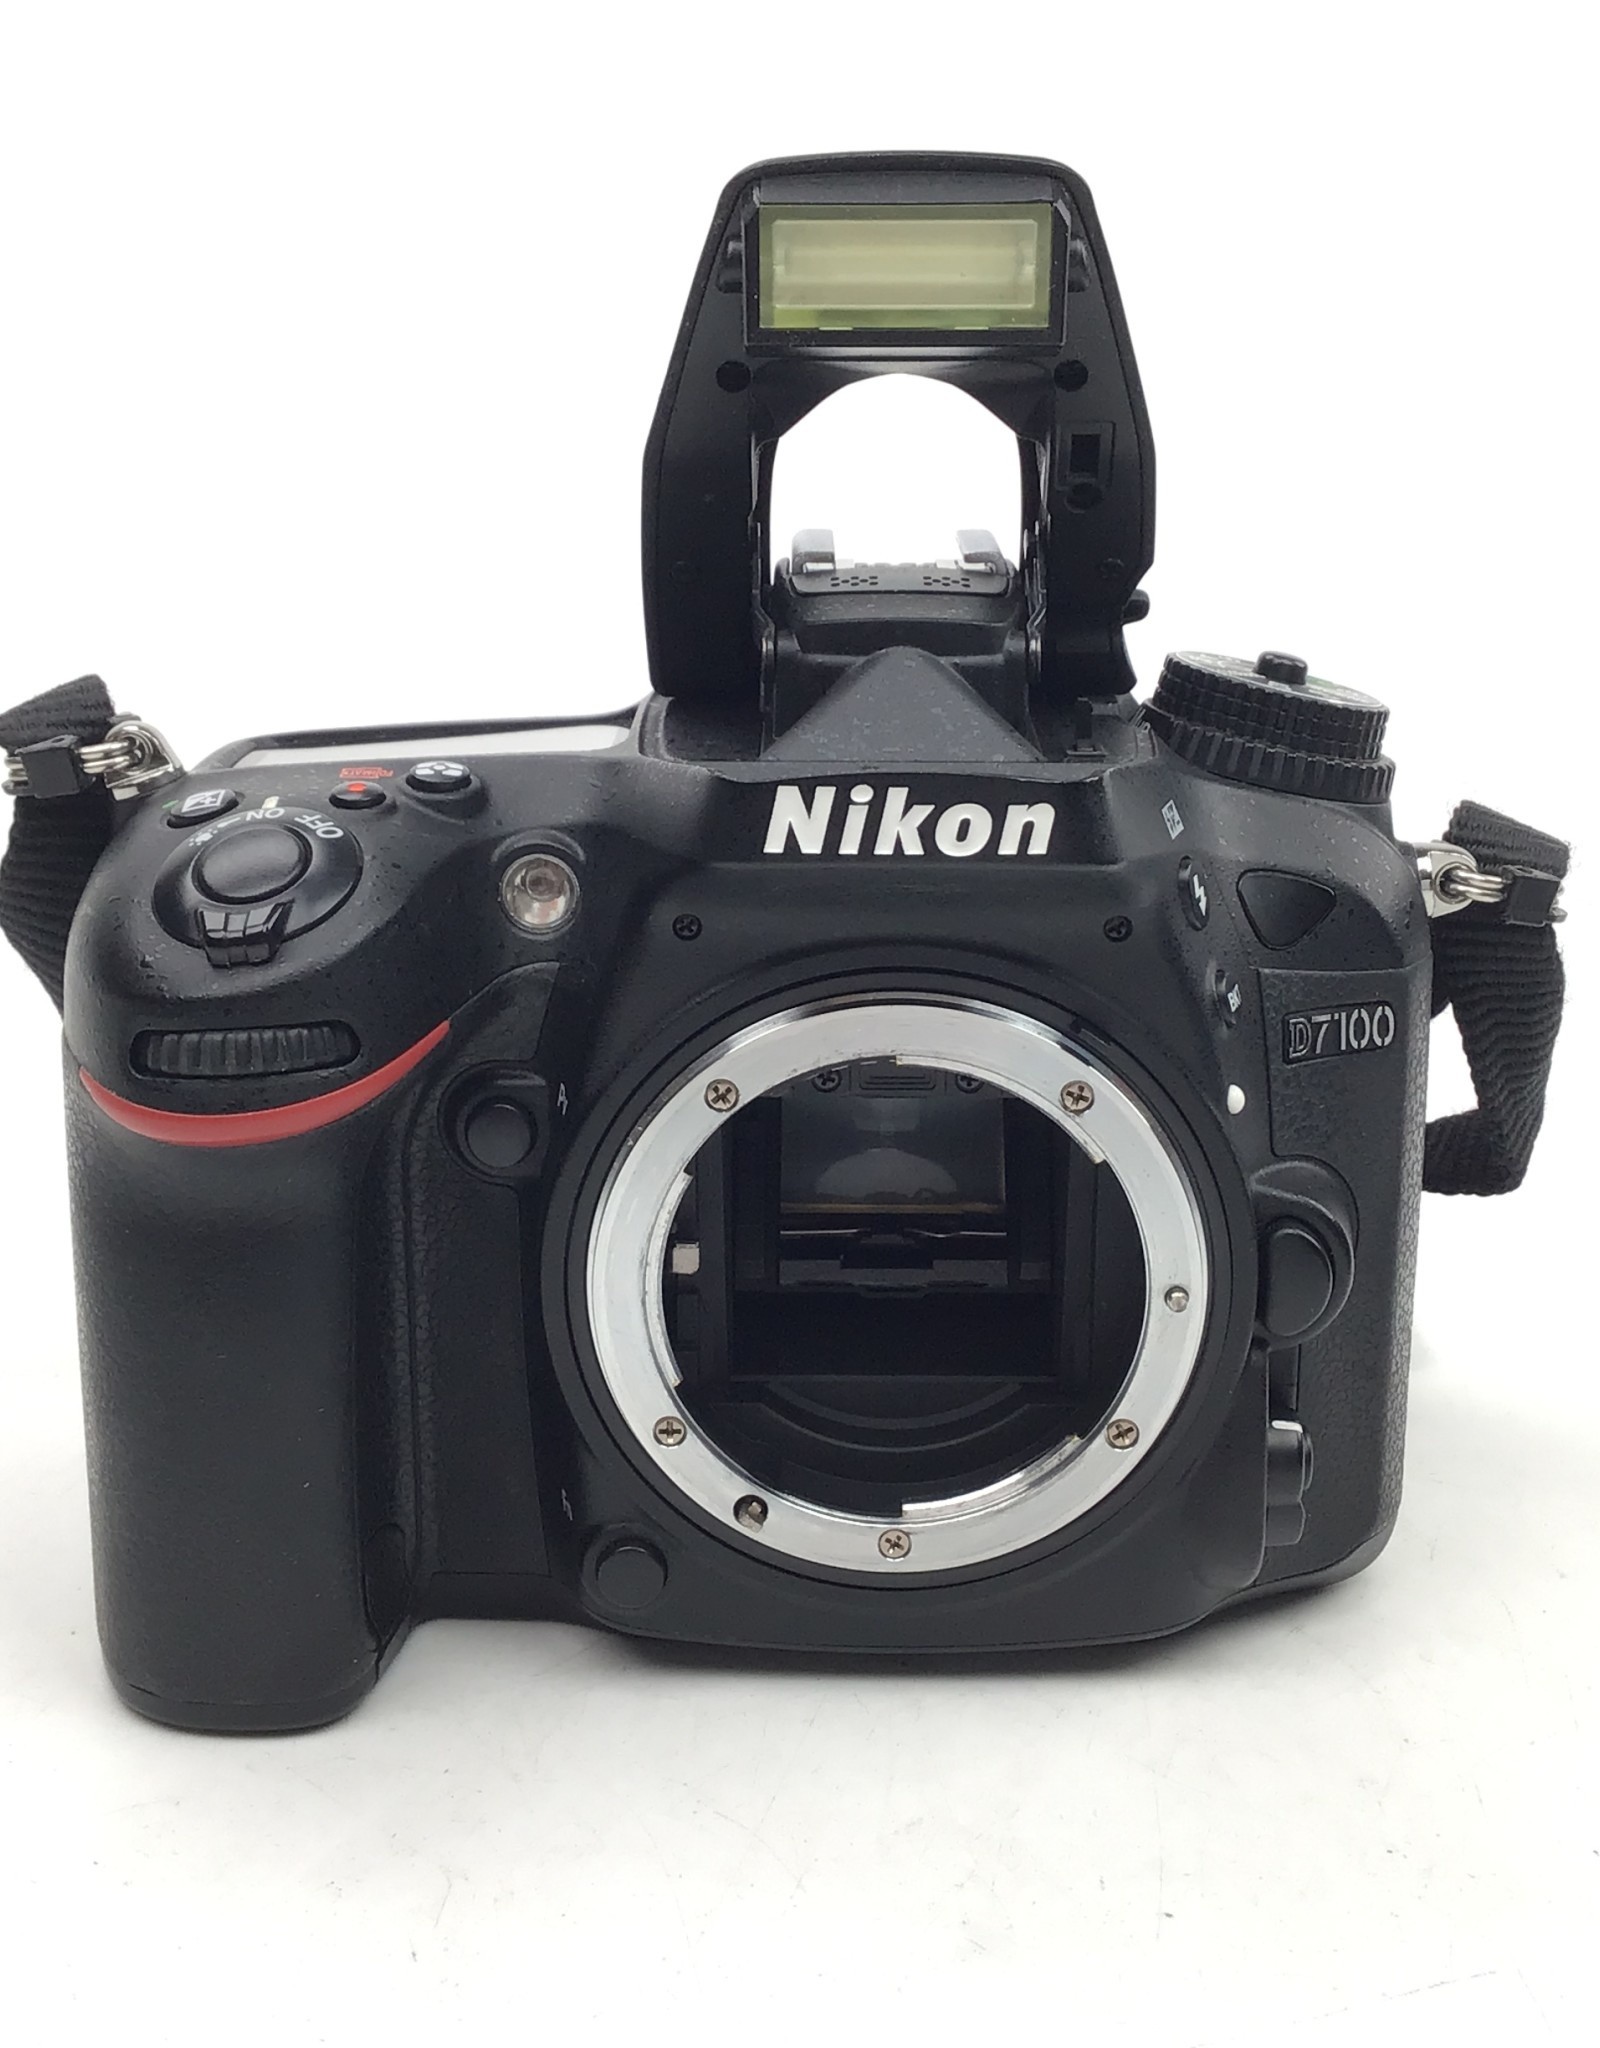 NIKON Nikon D7100 Camera Body Shutter Count 16213 Used Good